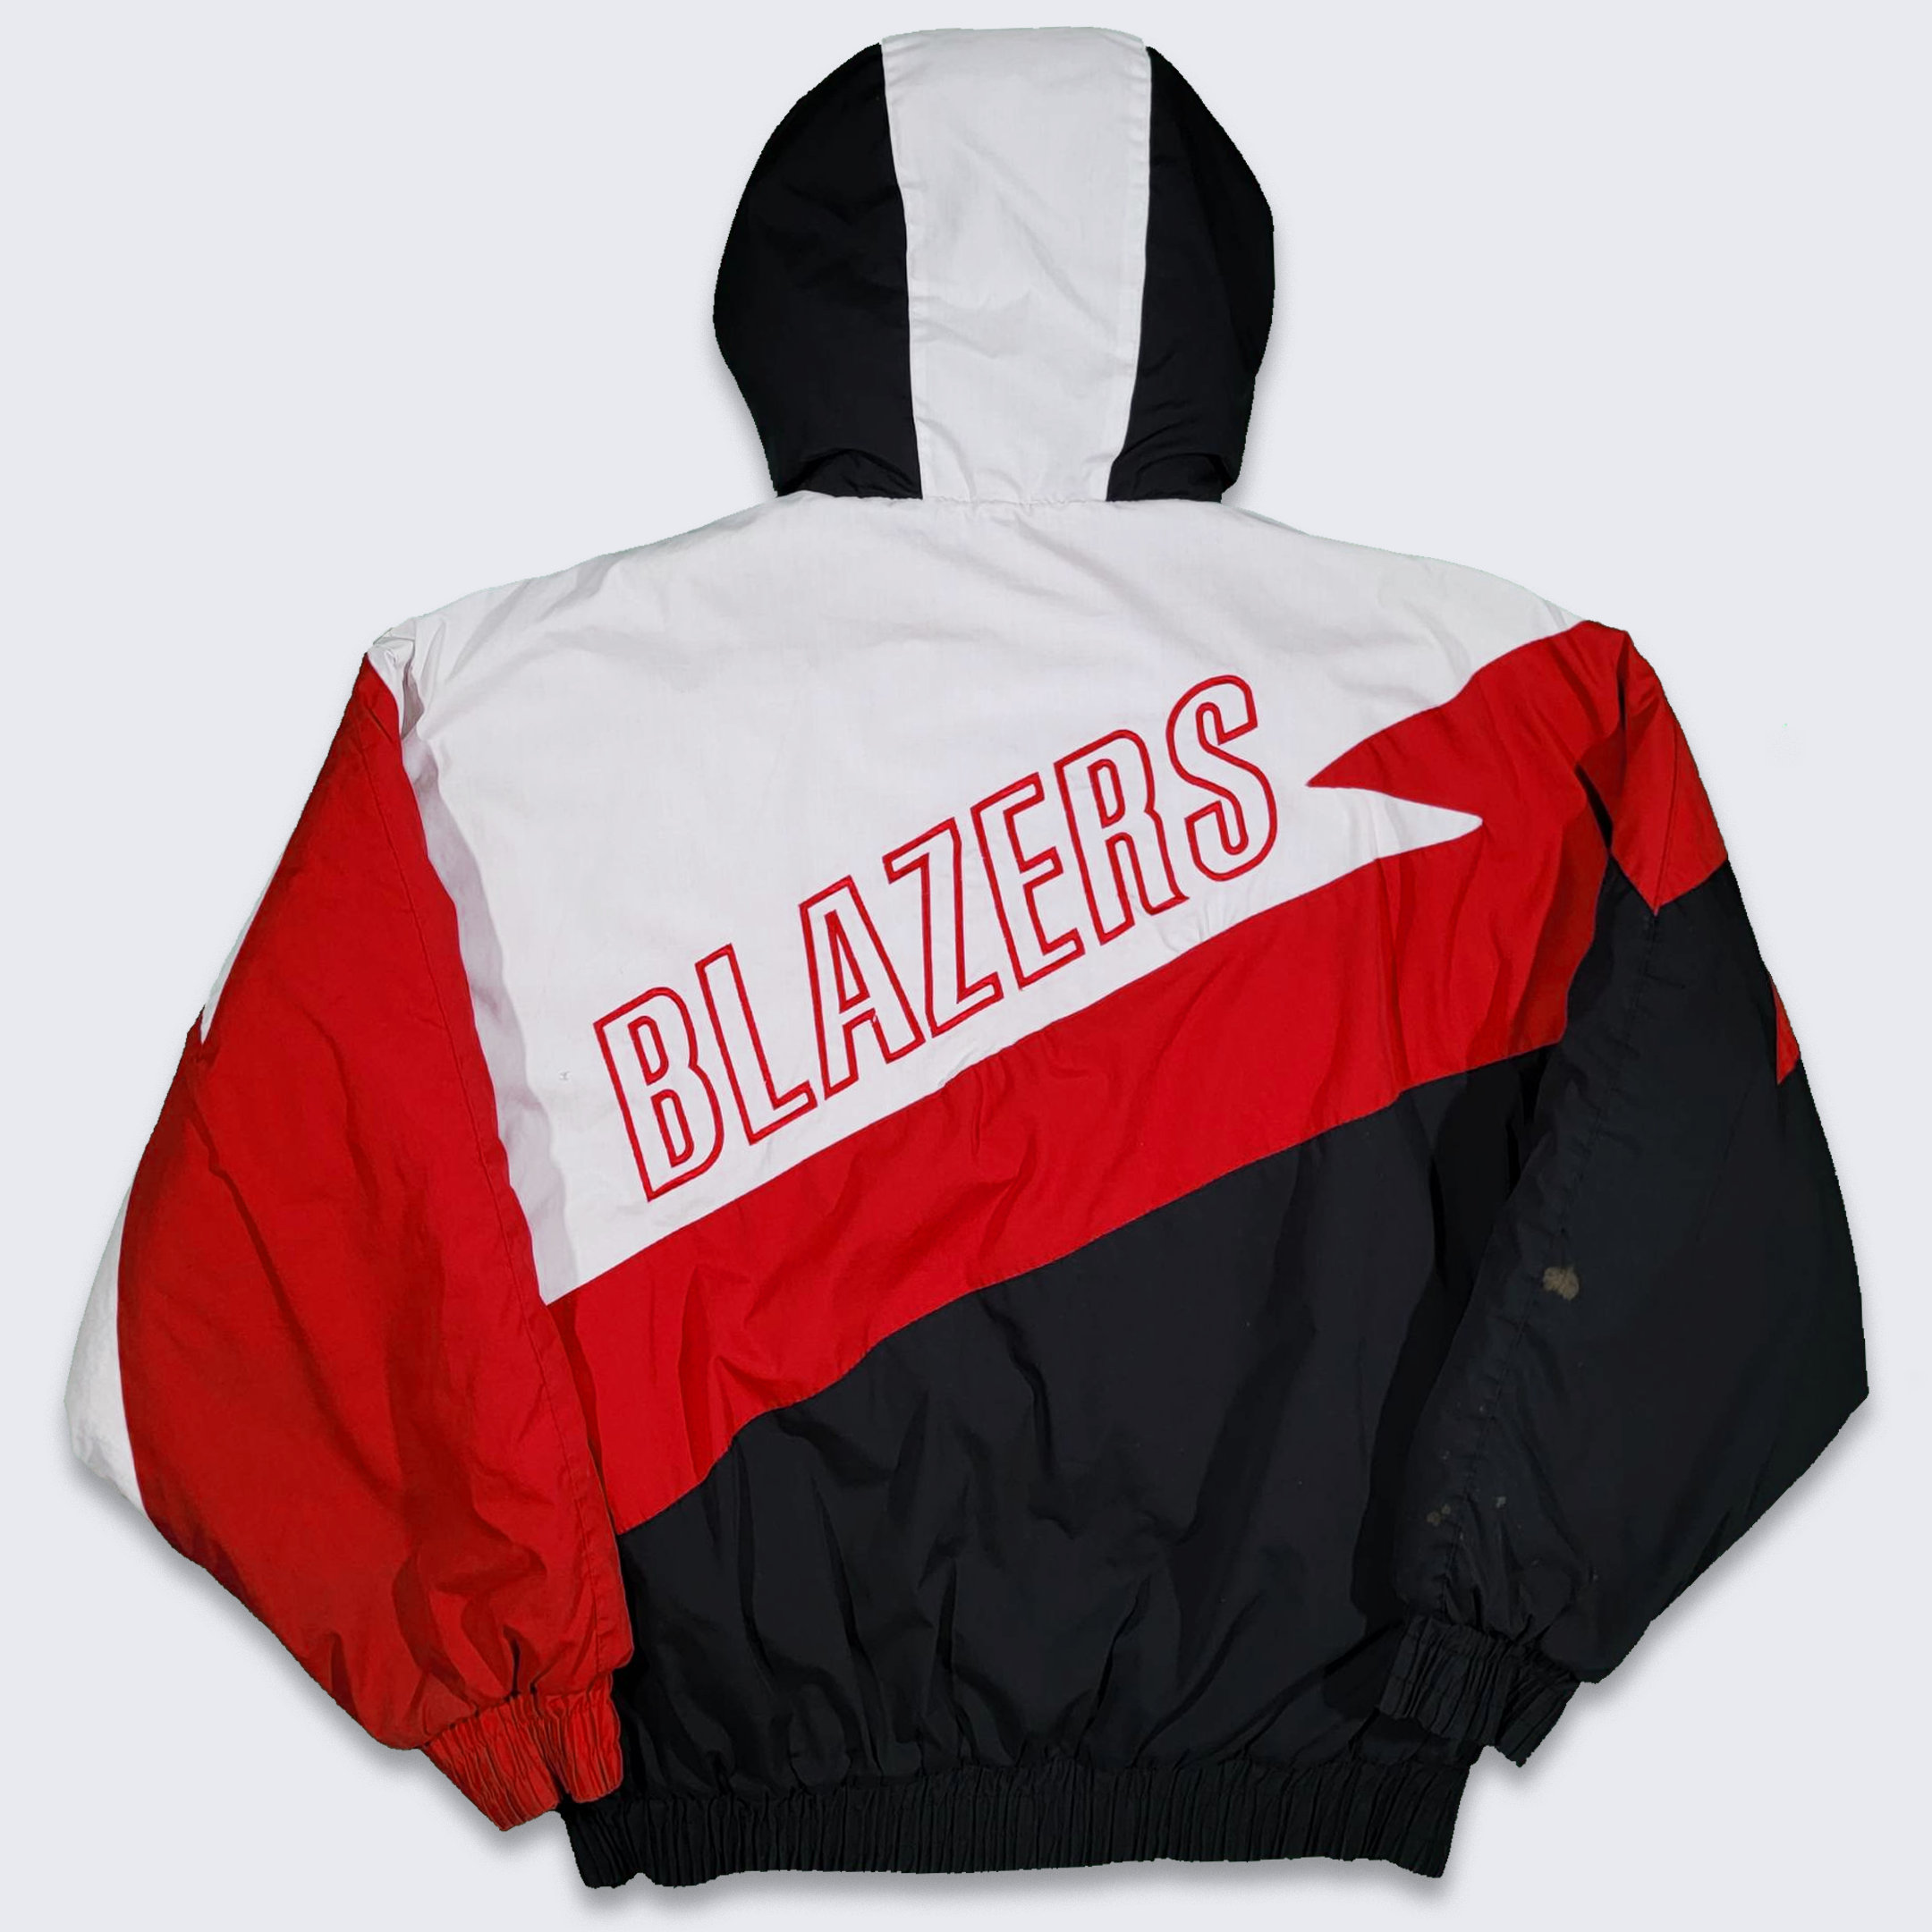 Portland Trail Blazers Vintage 90s Fans Gear Jacket very Rare 